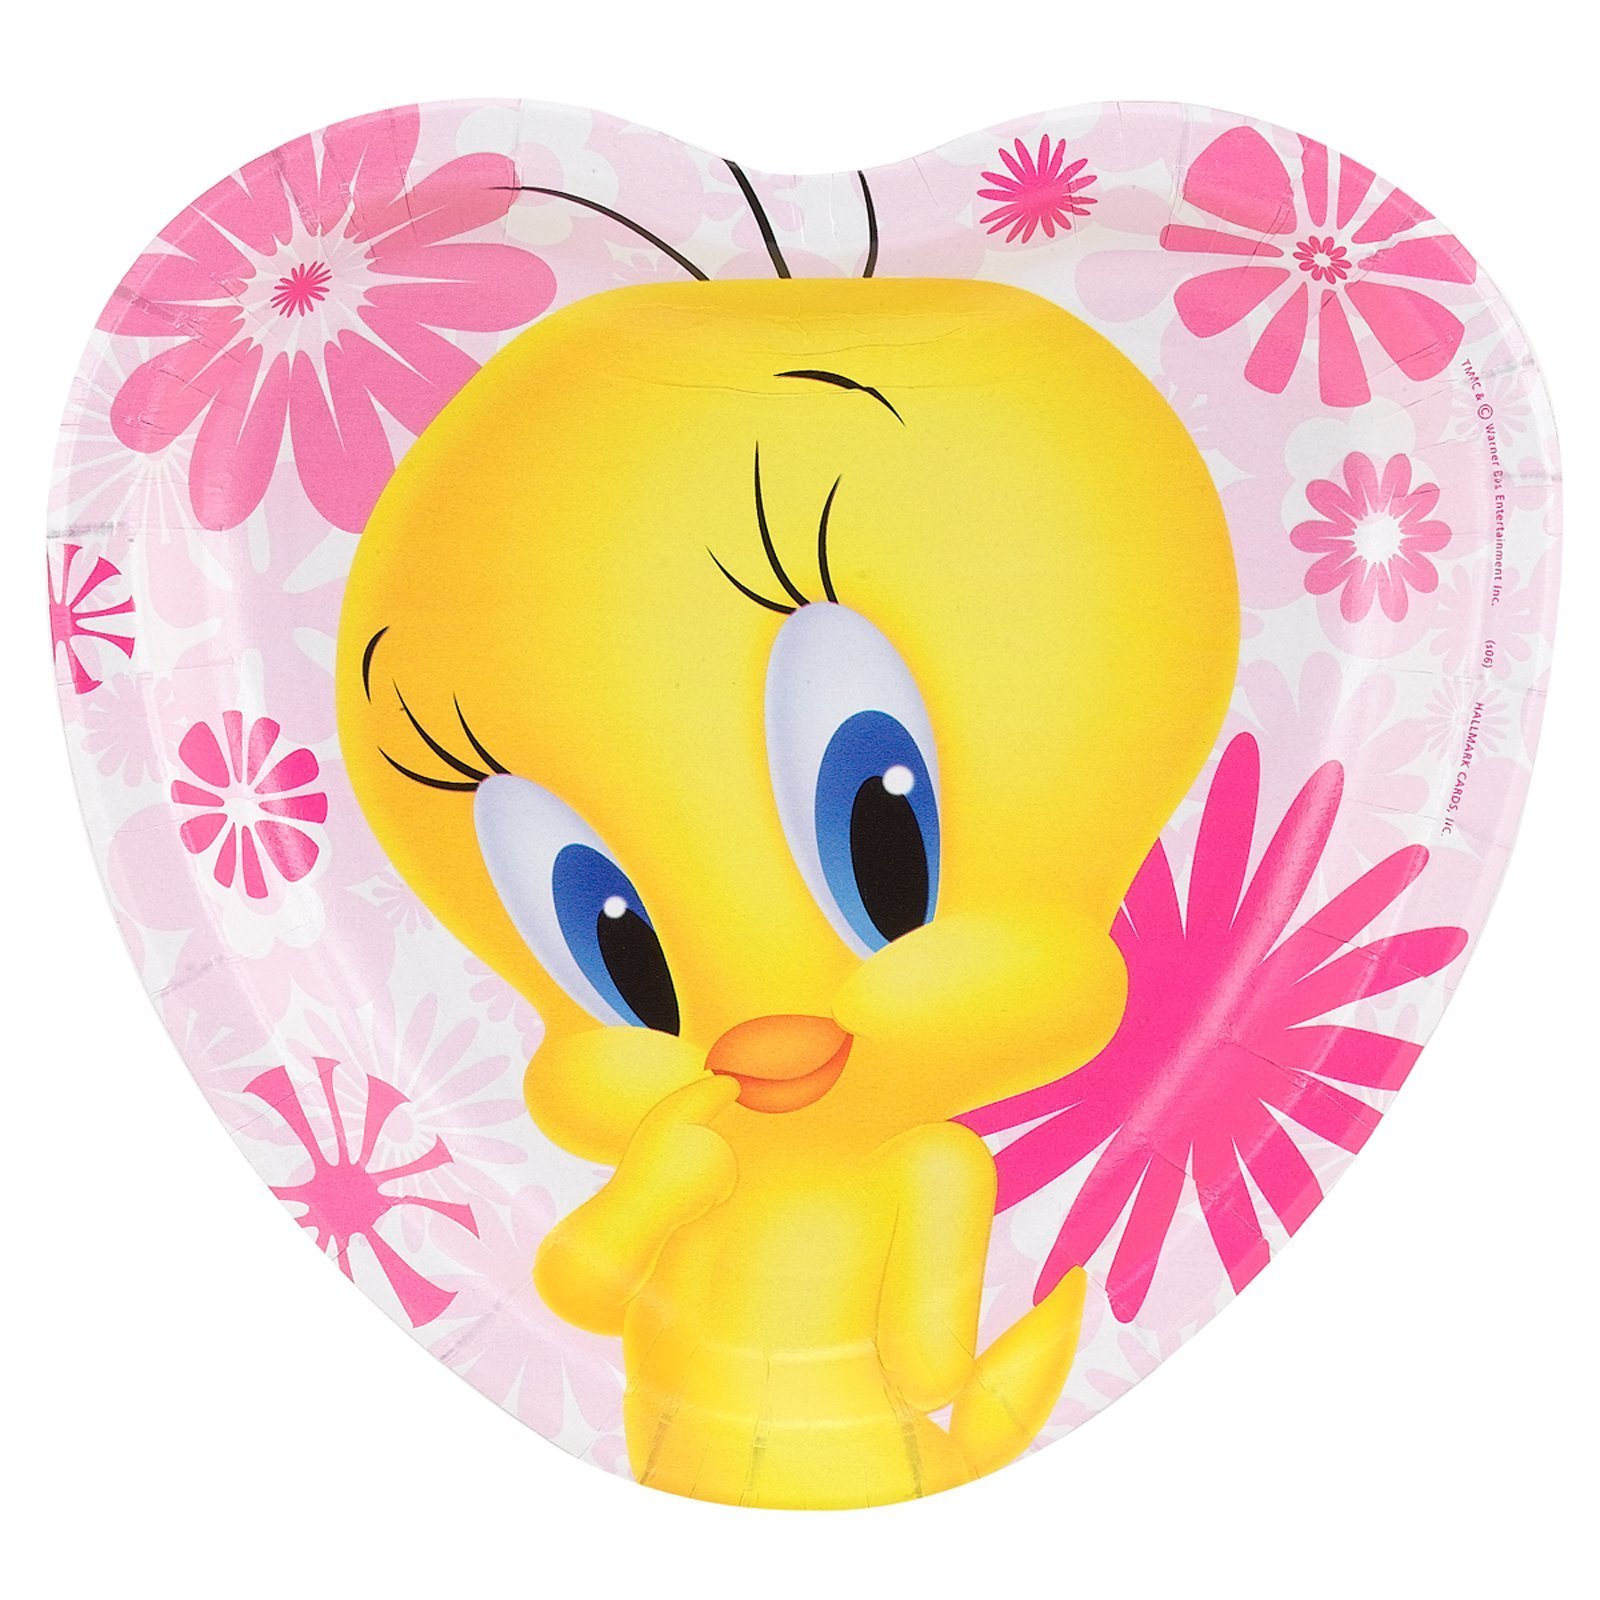 Tweety Bird Balloon tweety bird 5996789 1600 1600jpg